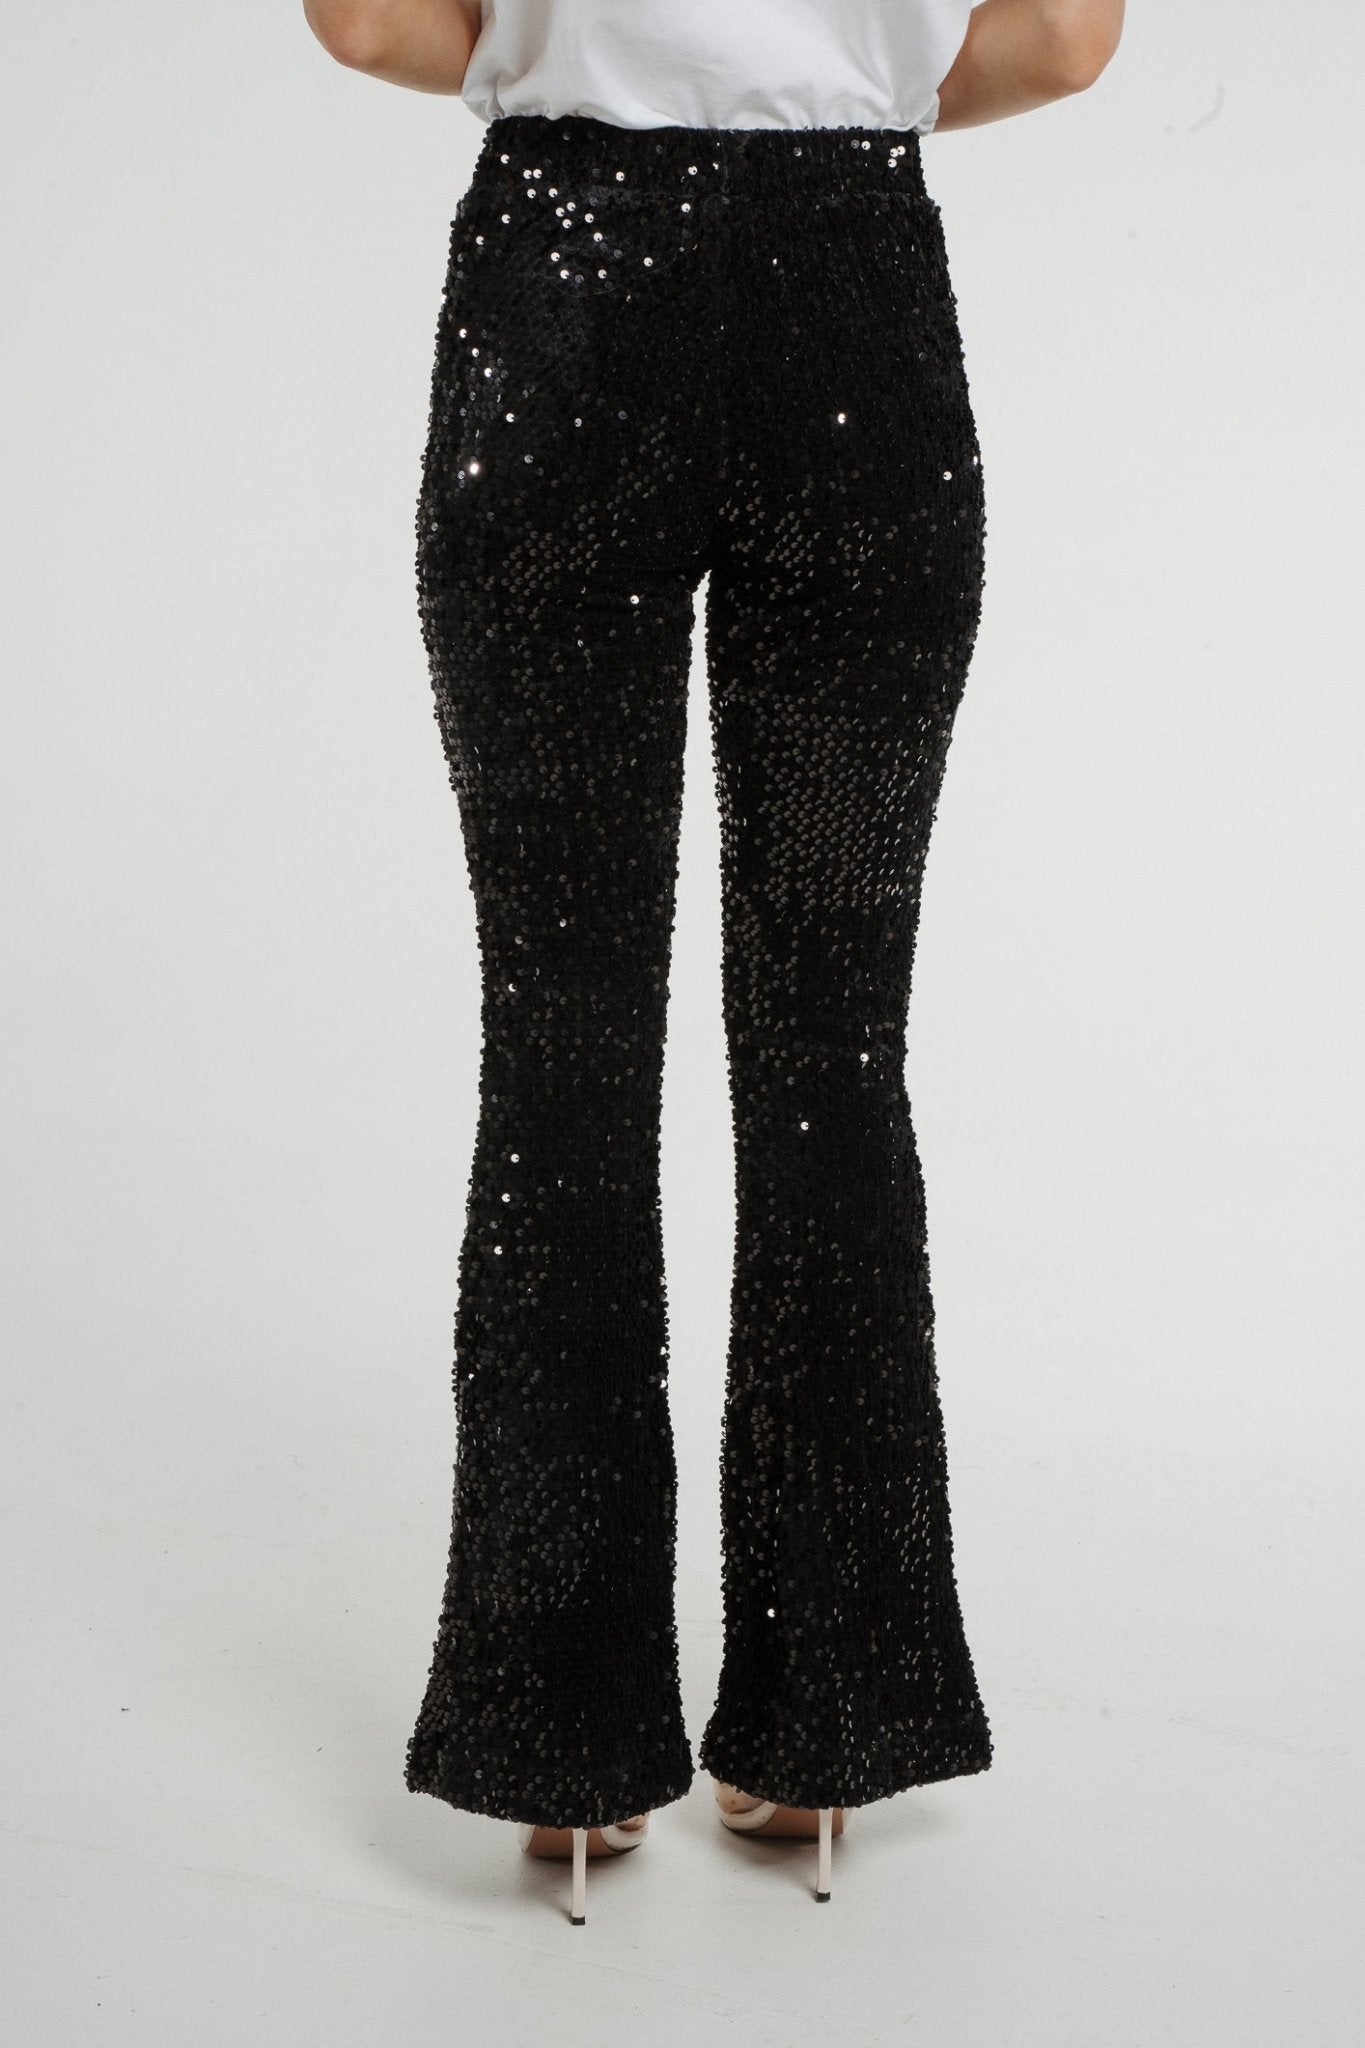 Jane Sequin Trouser In Black - The Walk in Wardrobe